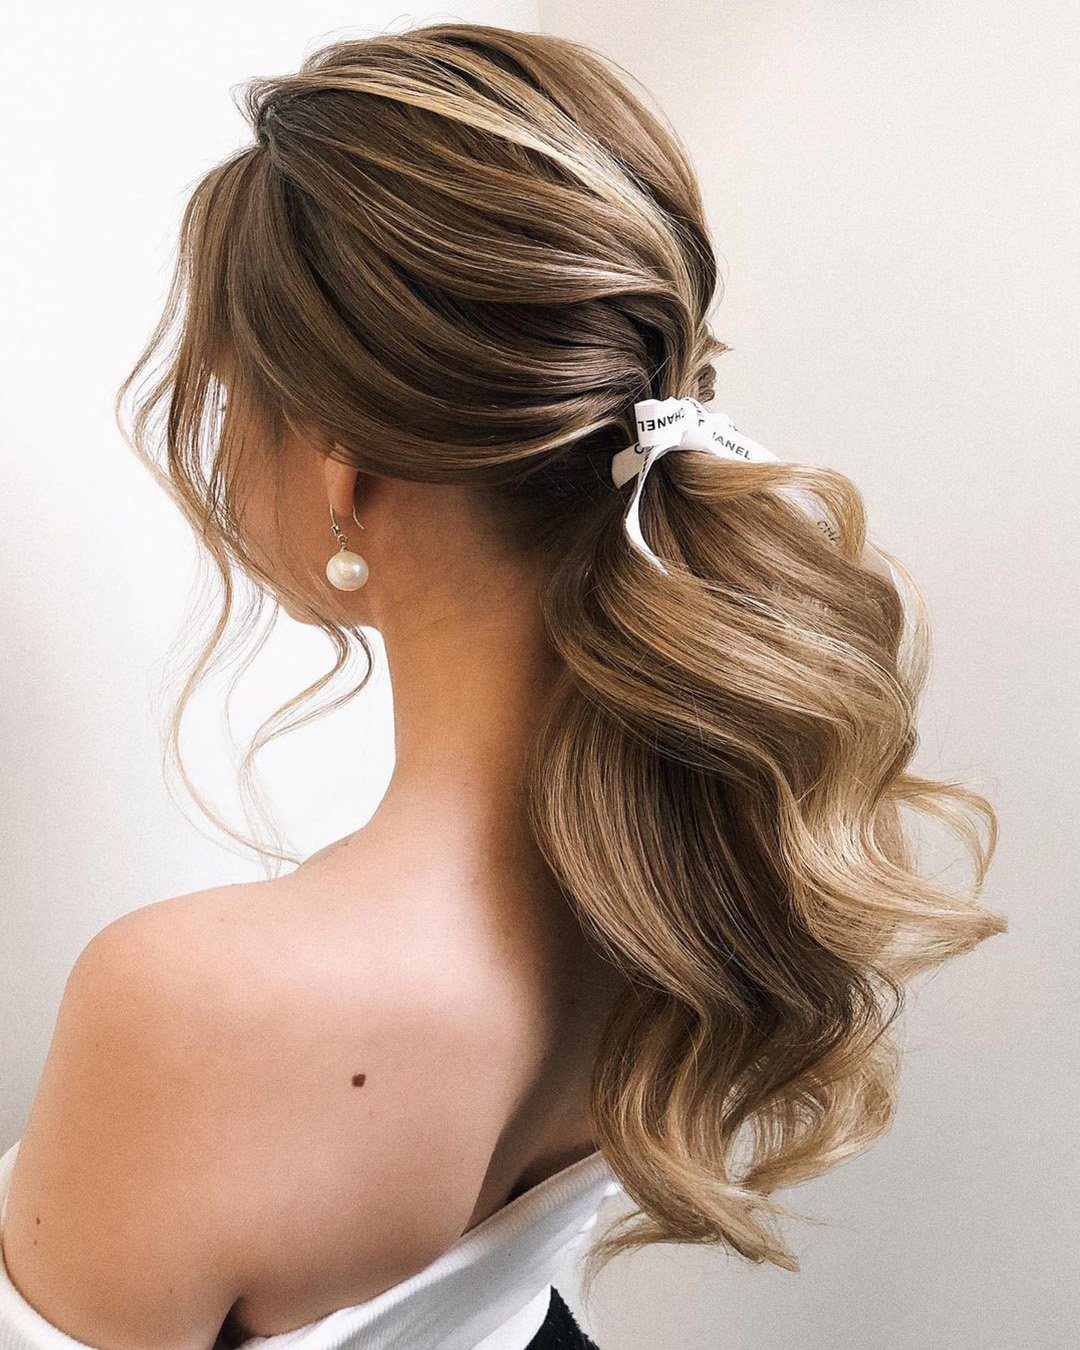 Textured ponytail